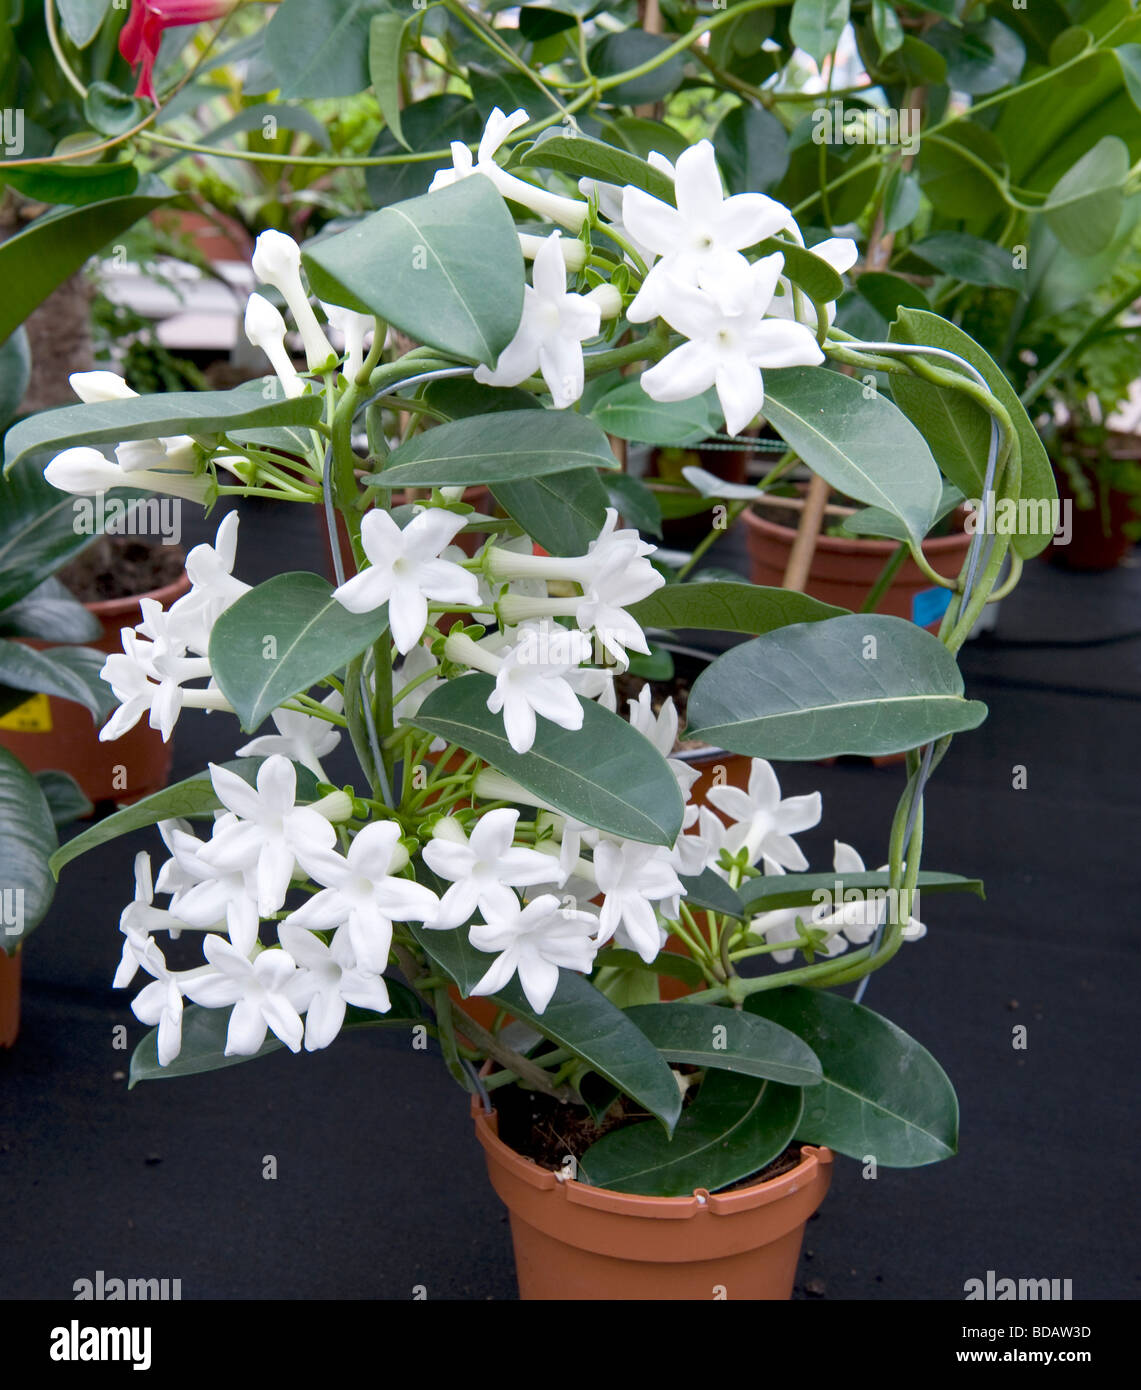 Asclepiadaceae Stephanotis floribunda. Pot grown upright plant with pure white trumpet shape flowers. Stock Photo